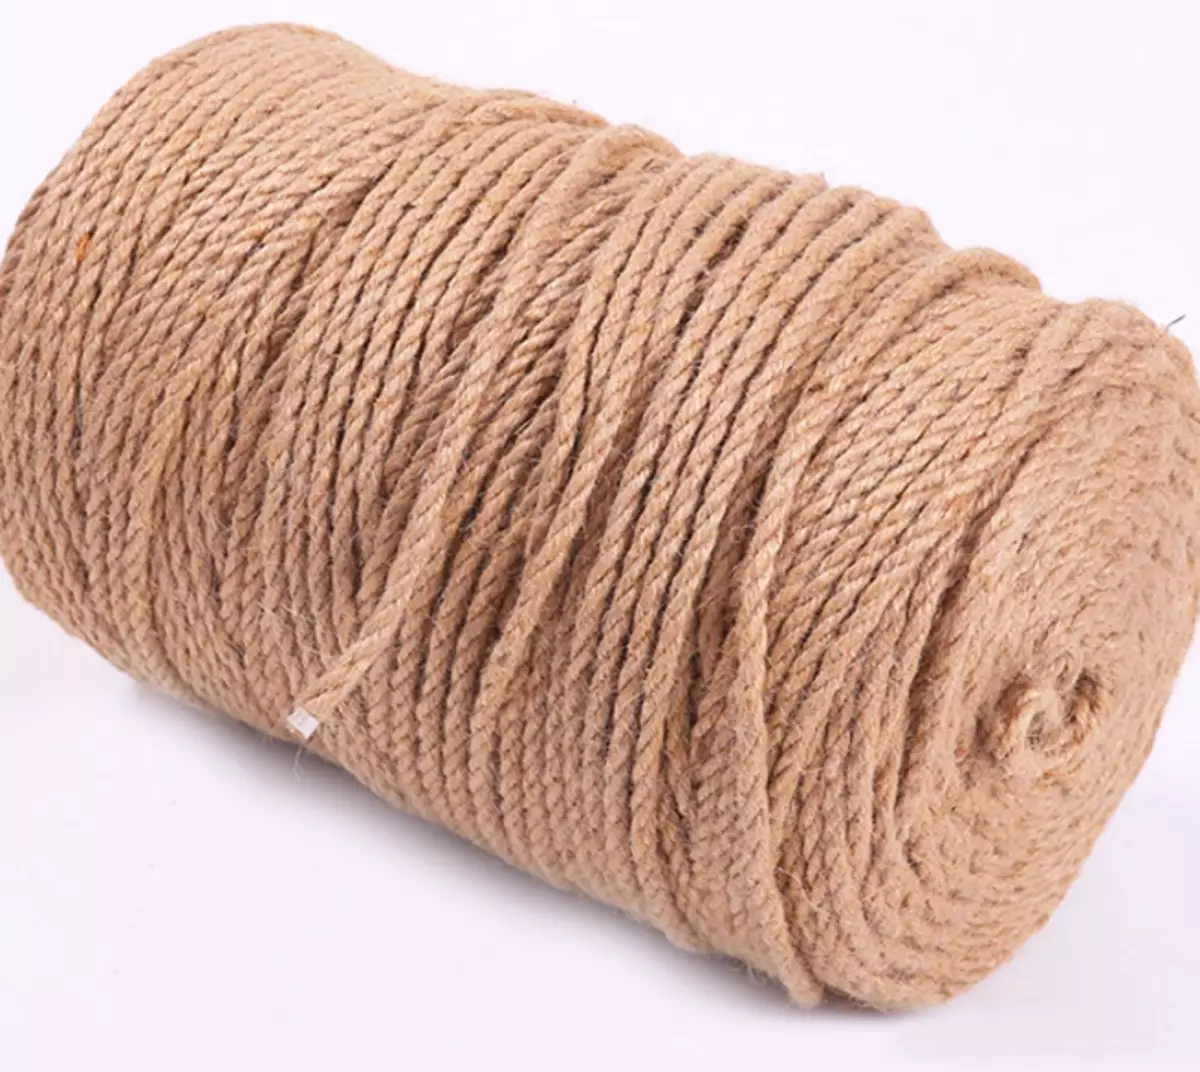 Jute- ის rug საკუთარი ხელებით: მეთოდები და სქემები ქსოვის ხალიჩა საწყისი twine crochet და ქსოვის ნემსი. სამაგისტრო კლასები დამწყებთათვის 26905_13